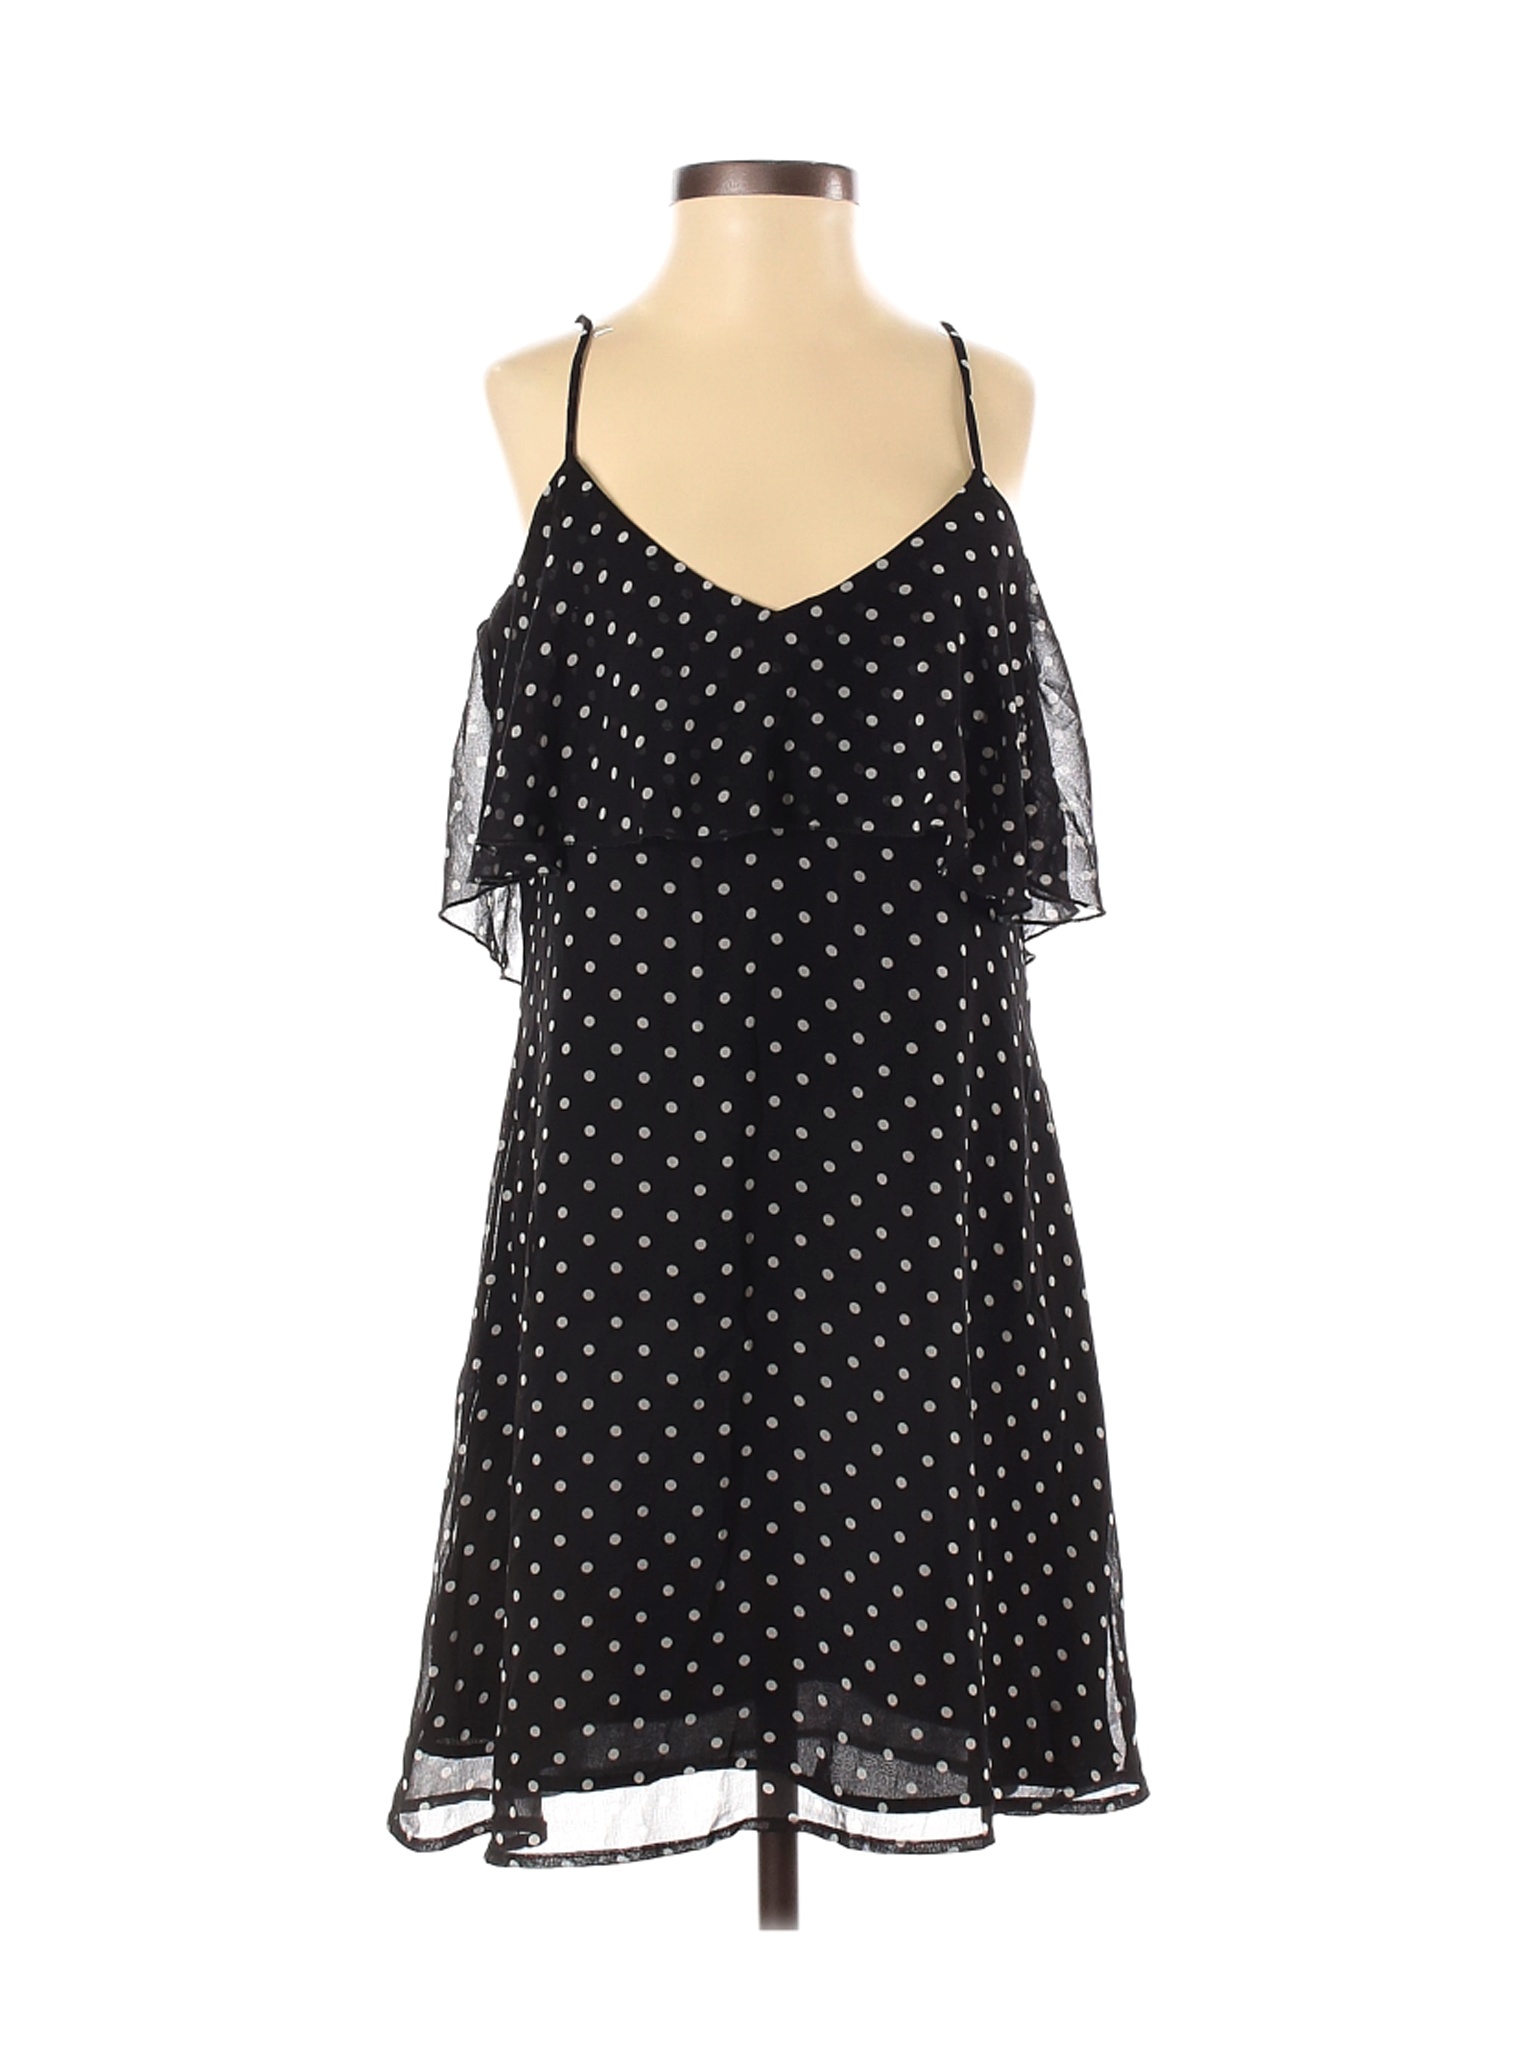 Tart Women Black Casual Dress S | eBay